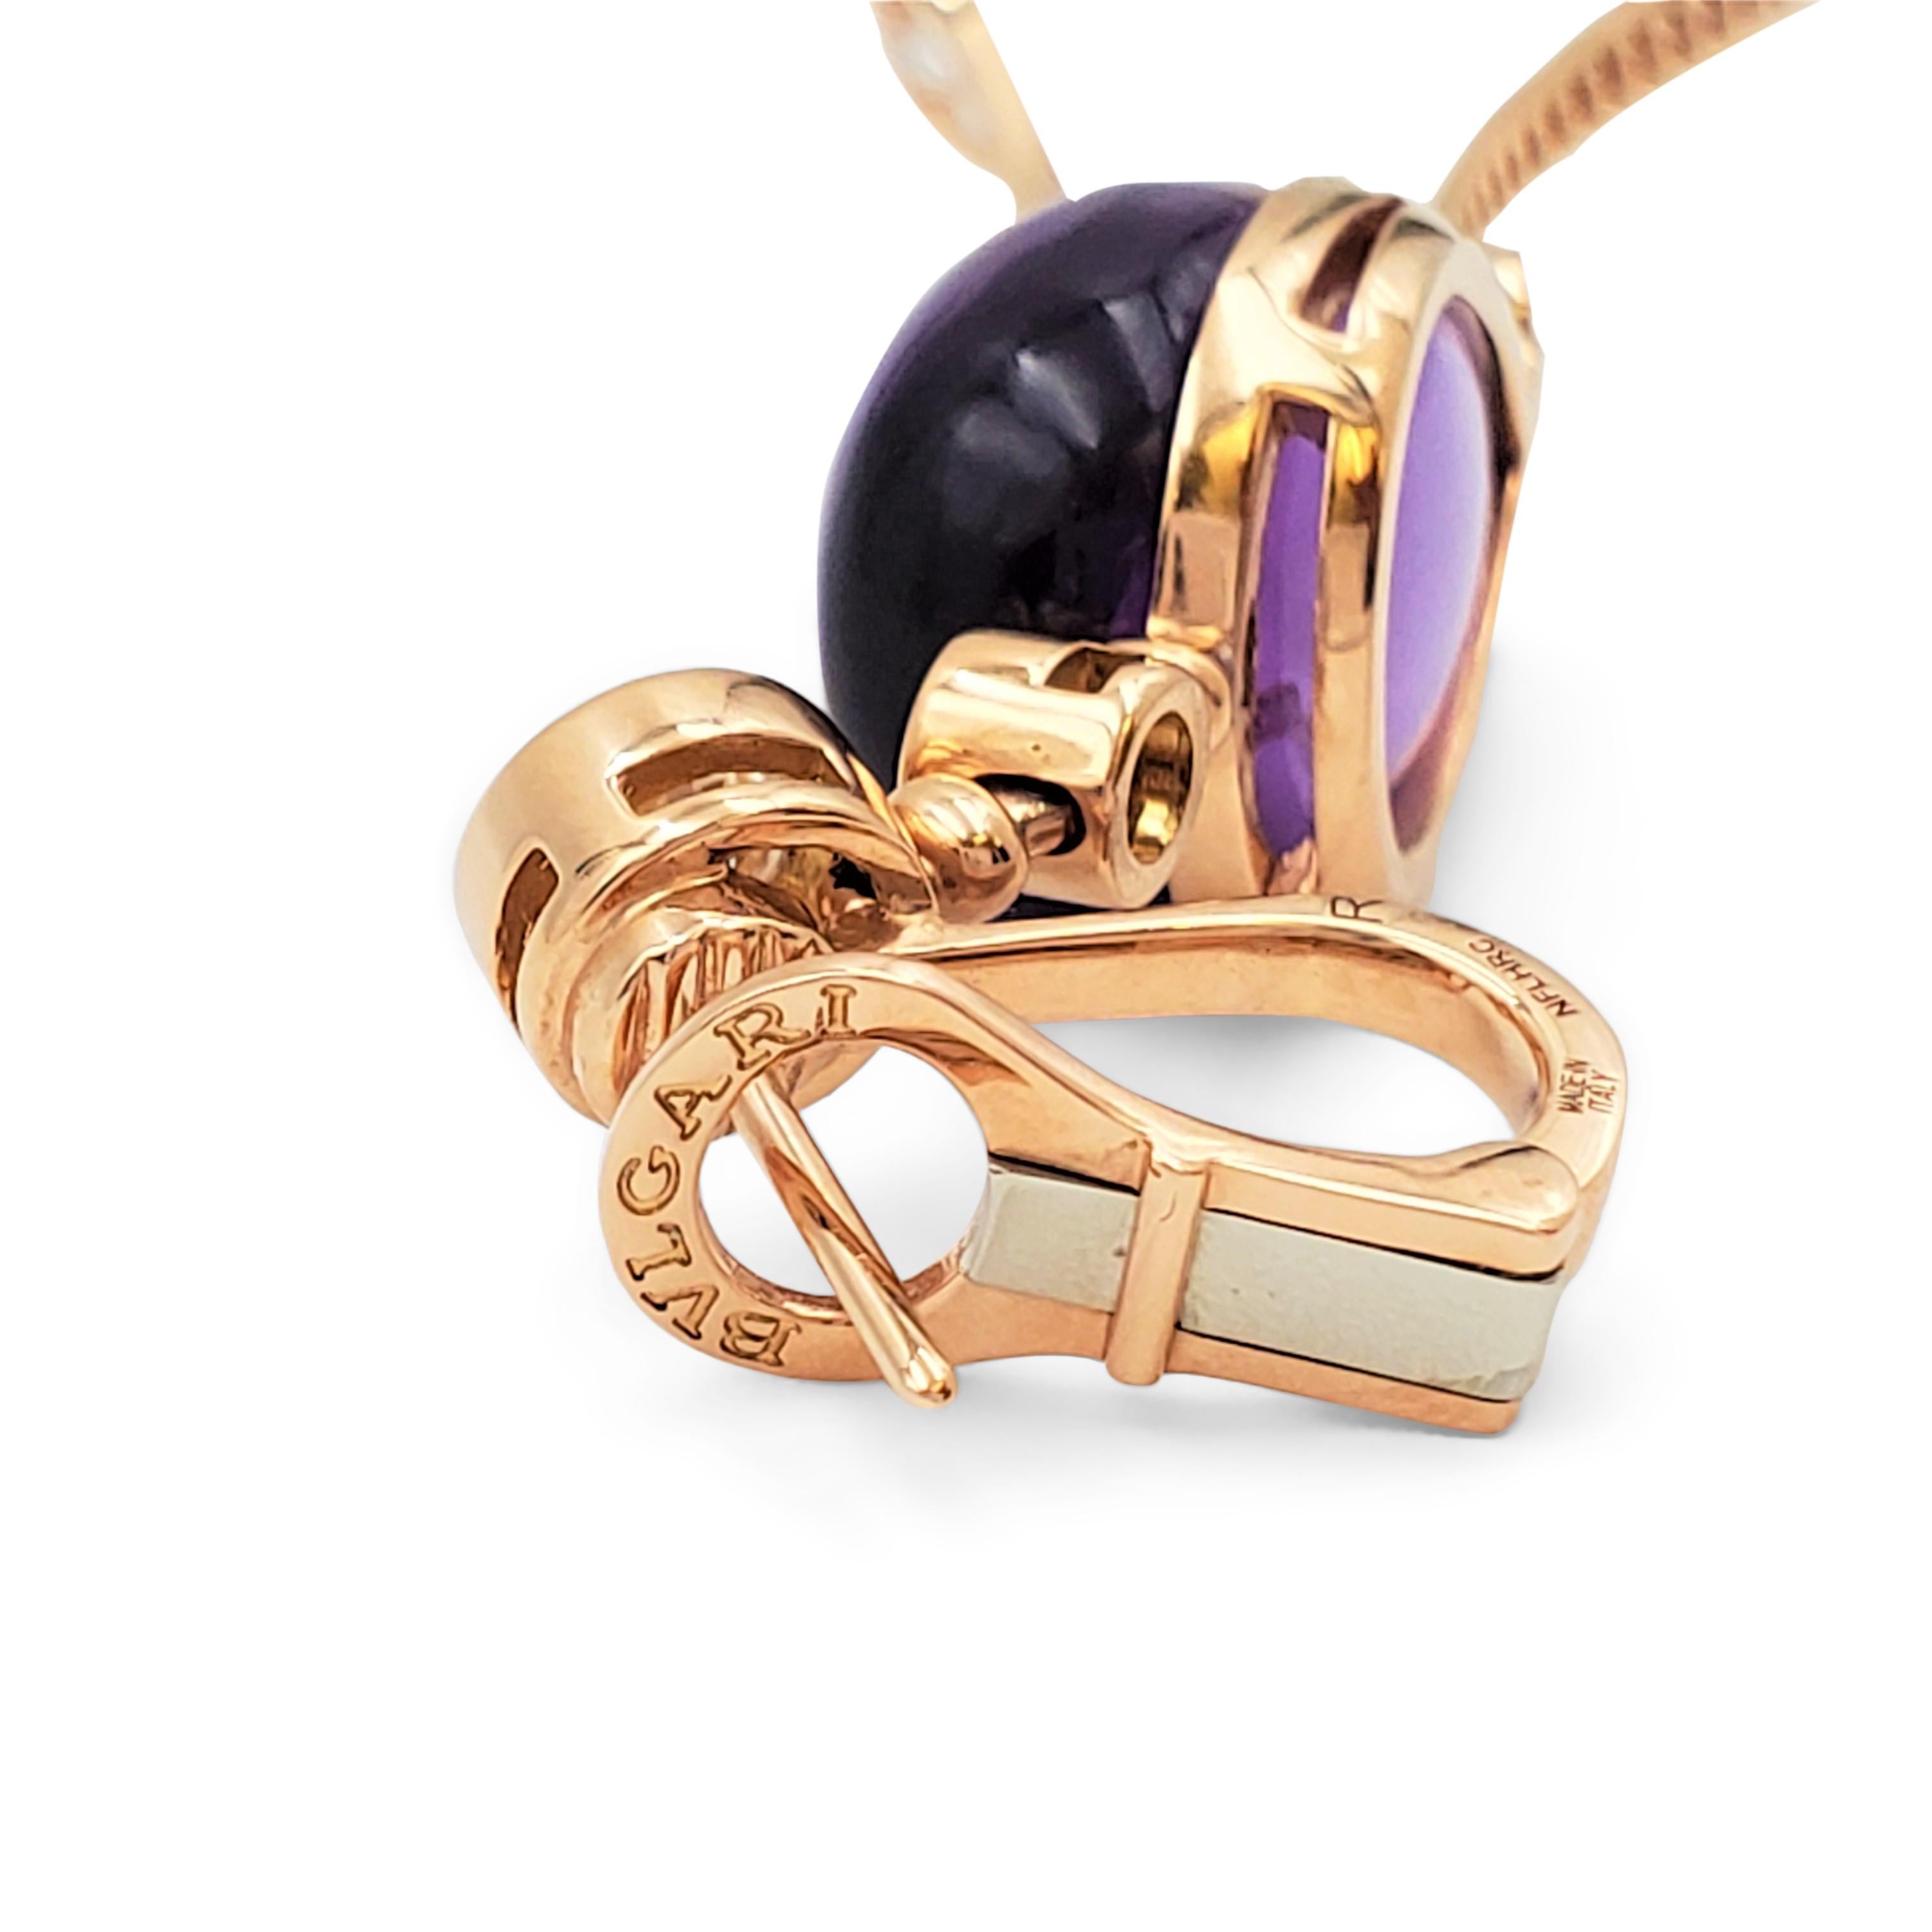 Cabochon Bvlgari 'Festa' Rose Gold Amethyst Quartz and Diamond Earrings